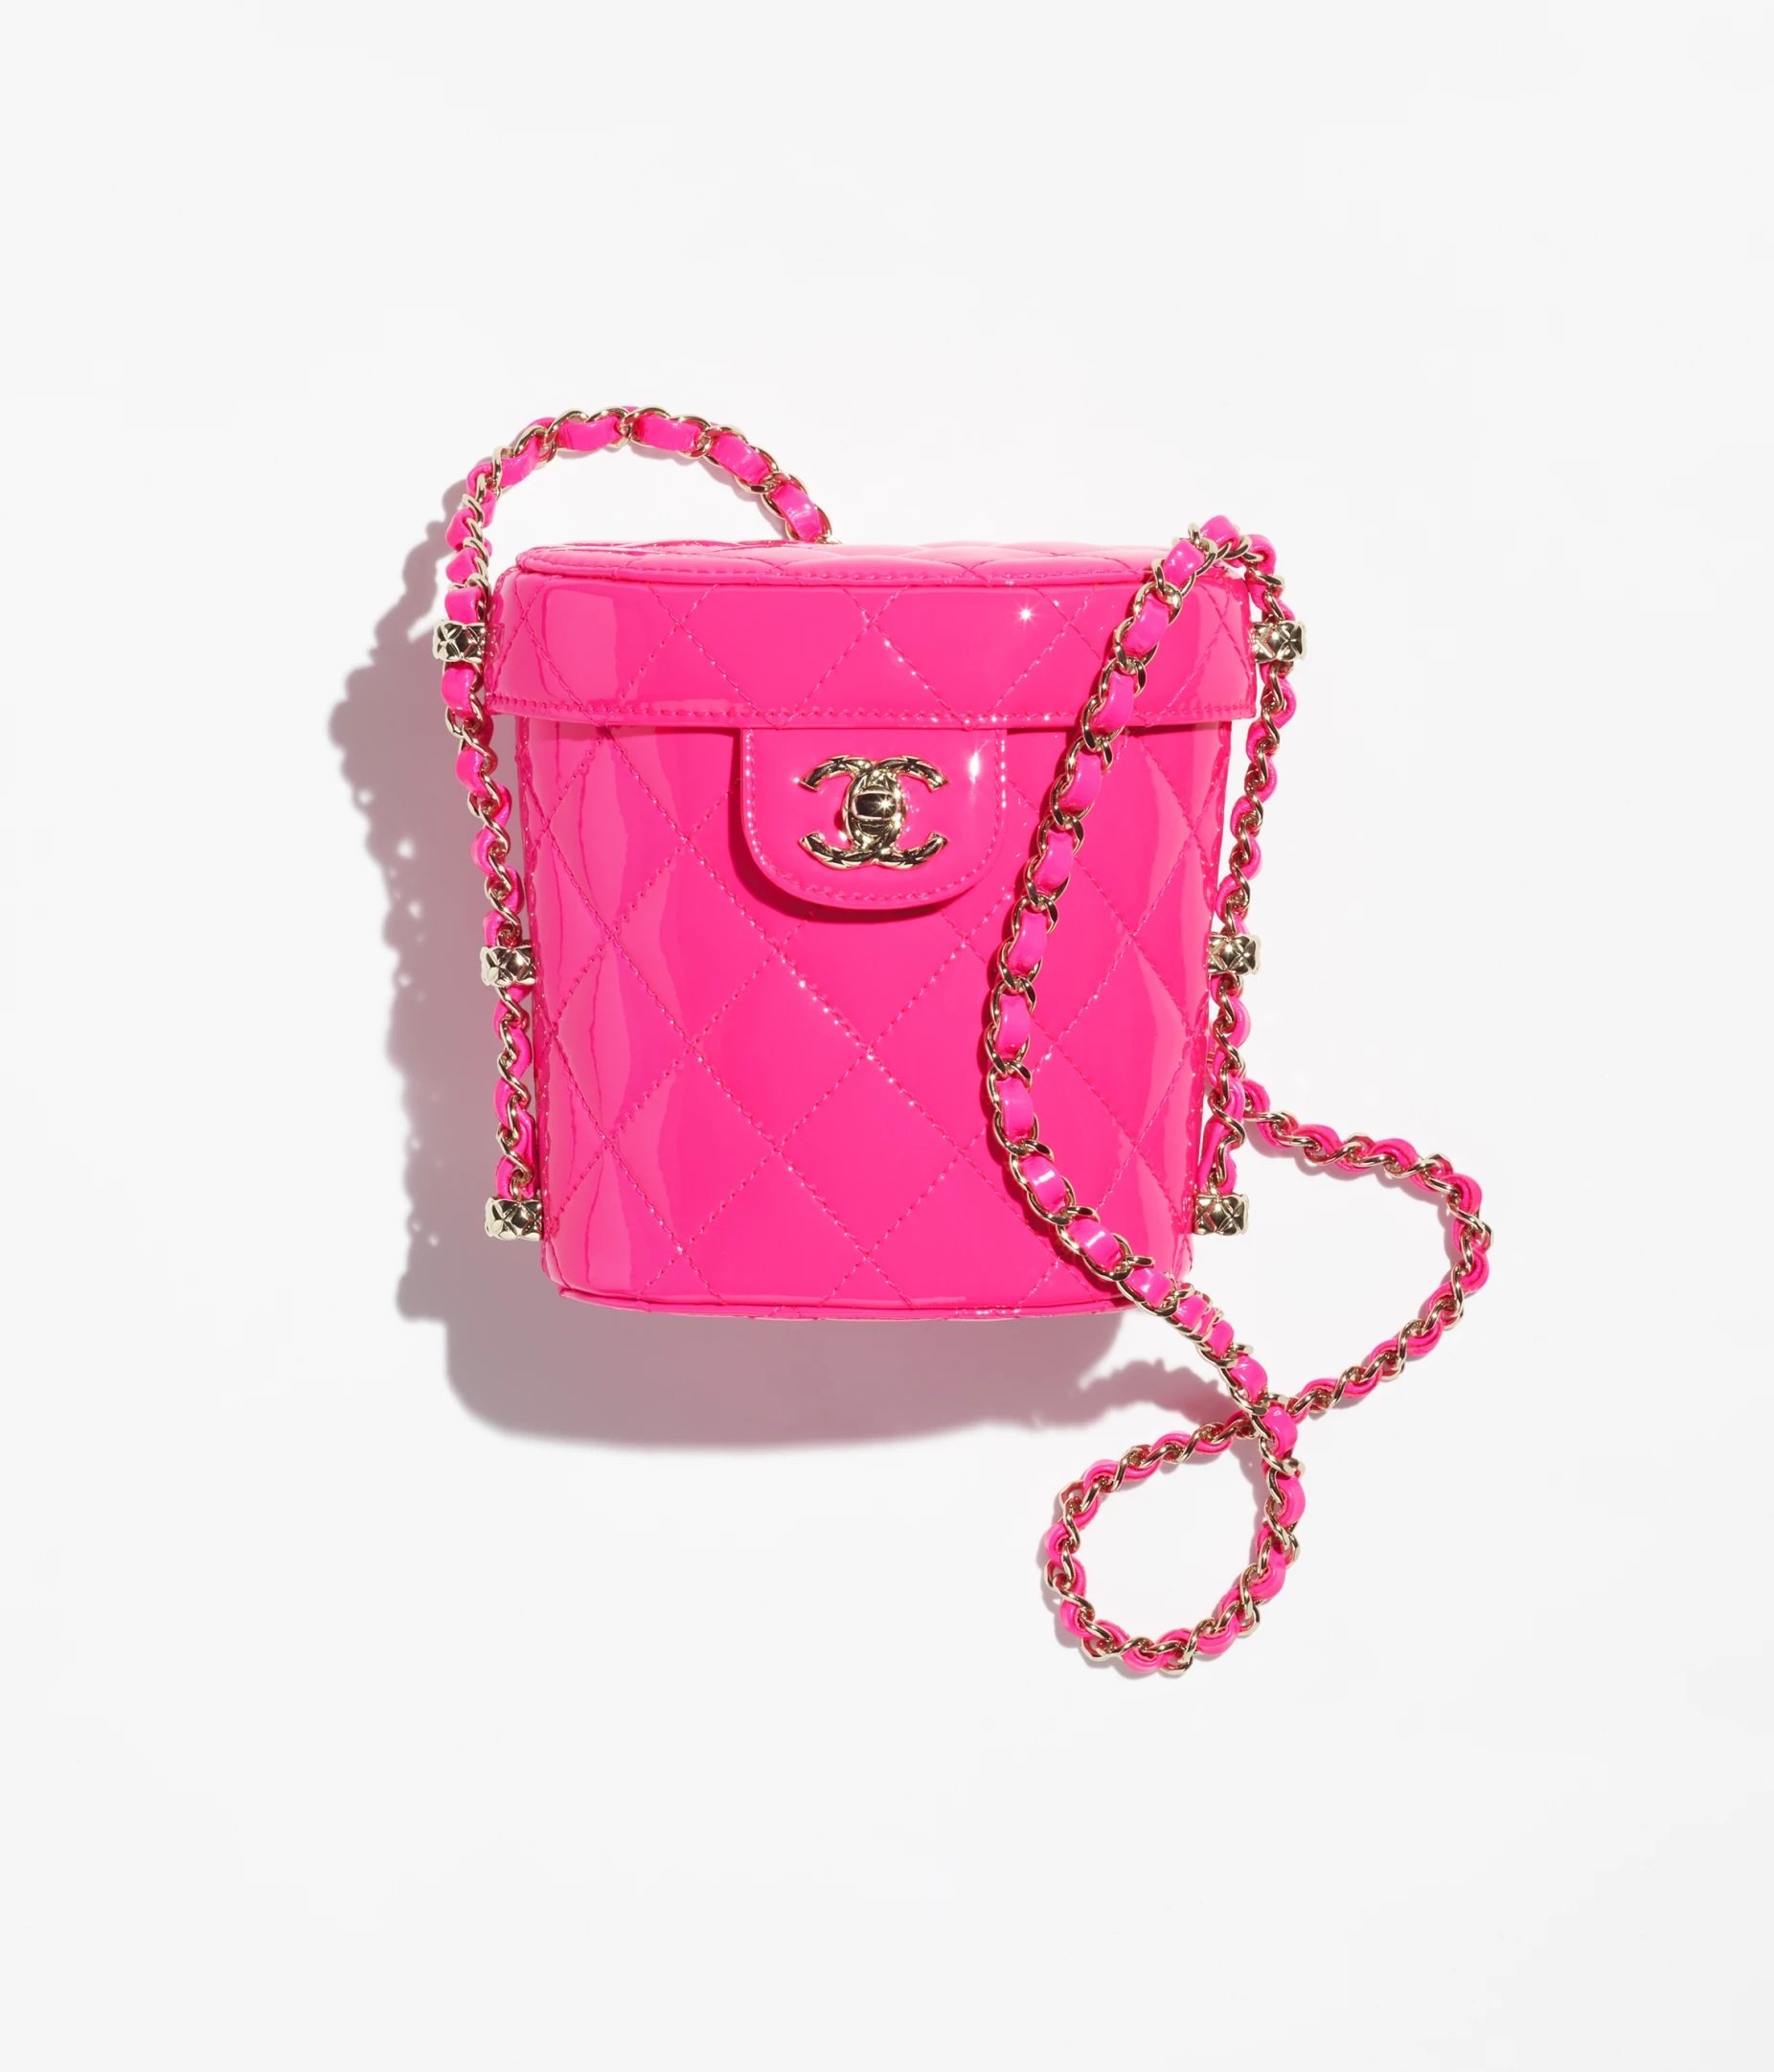 Chanel Small Vanity Case in Neon Pink.jpg